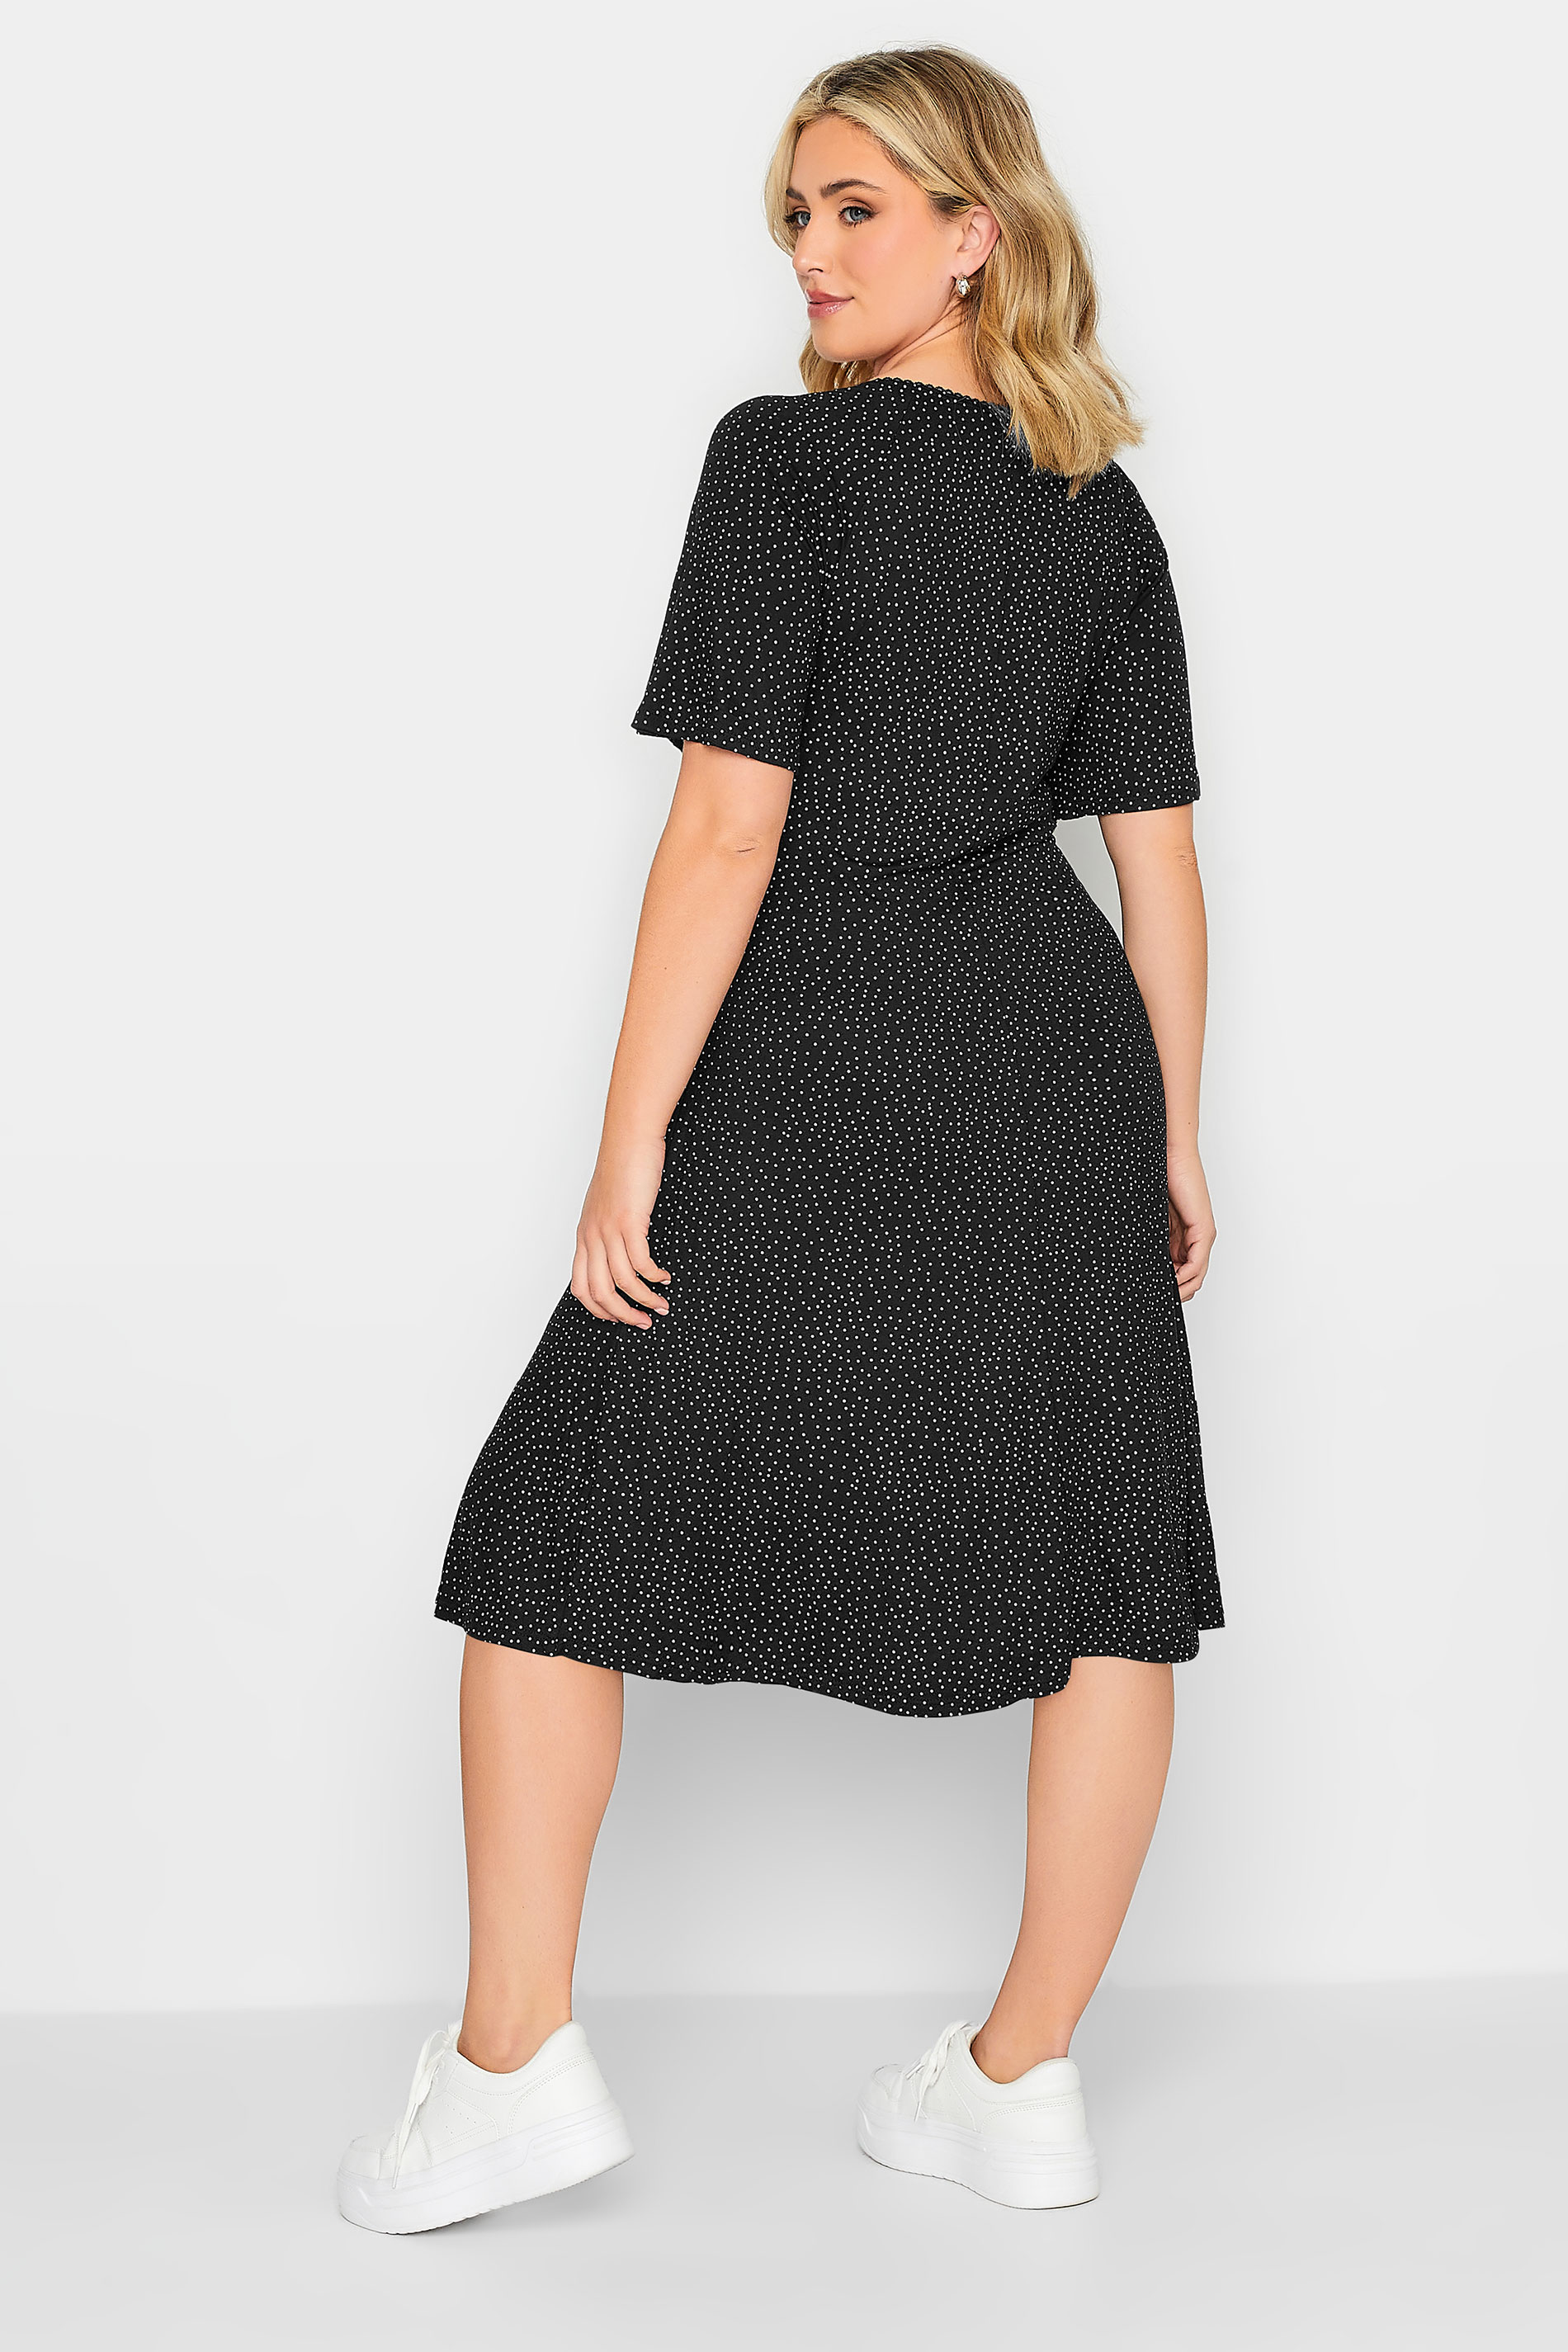 YOURS PETITE Plus Size Black Spot Print Lace Trim Midi Dress | Yours Clothing 3